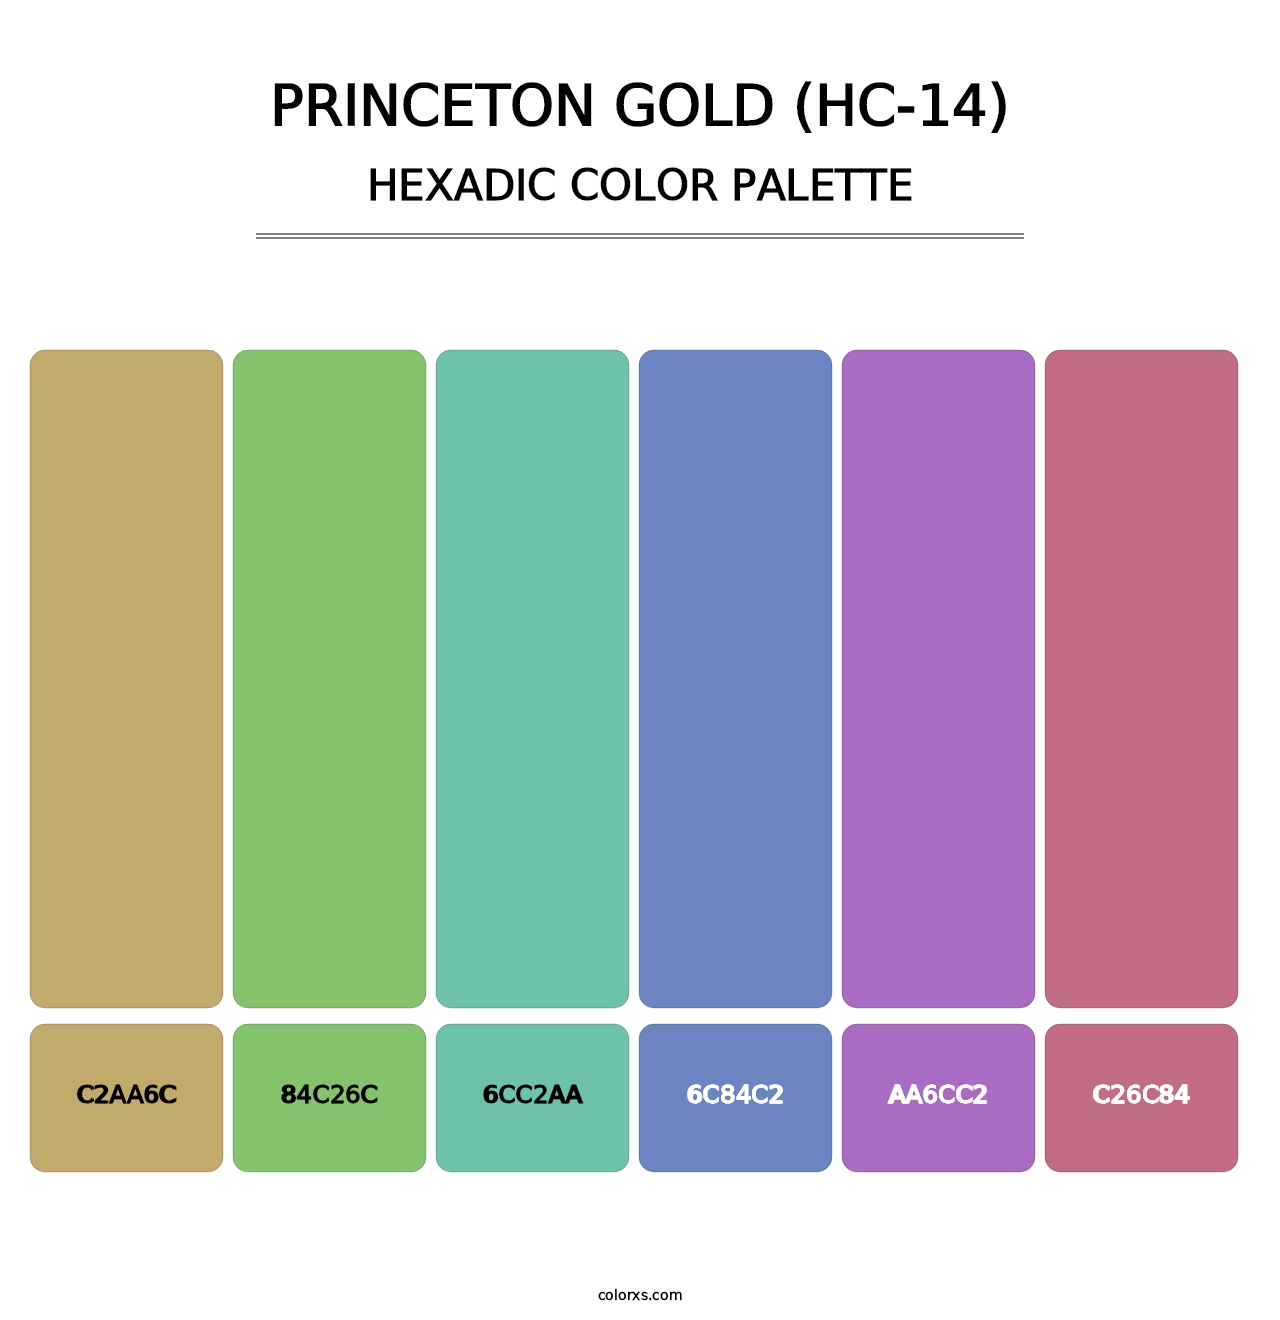 Princeton Gold (HC-14) - Hexadic Color Palette